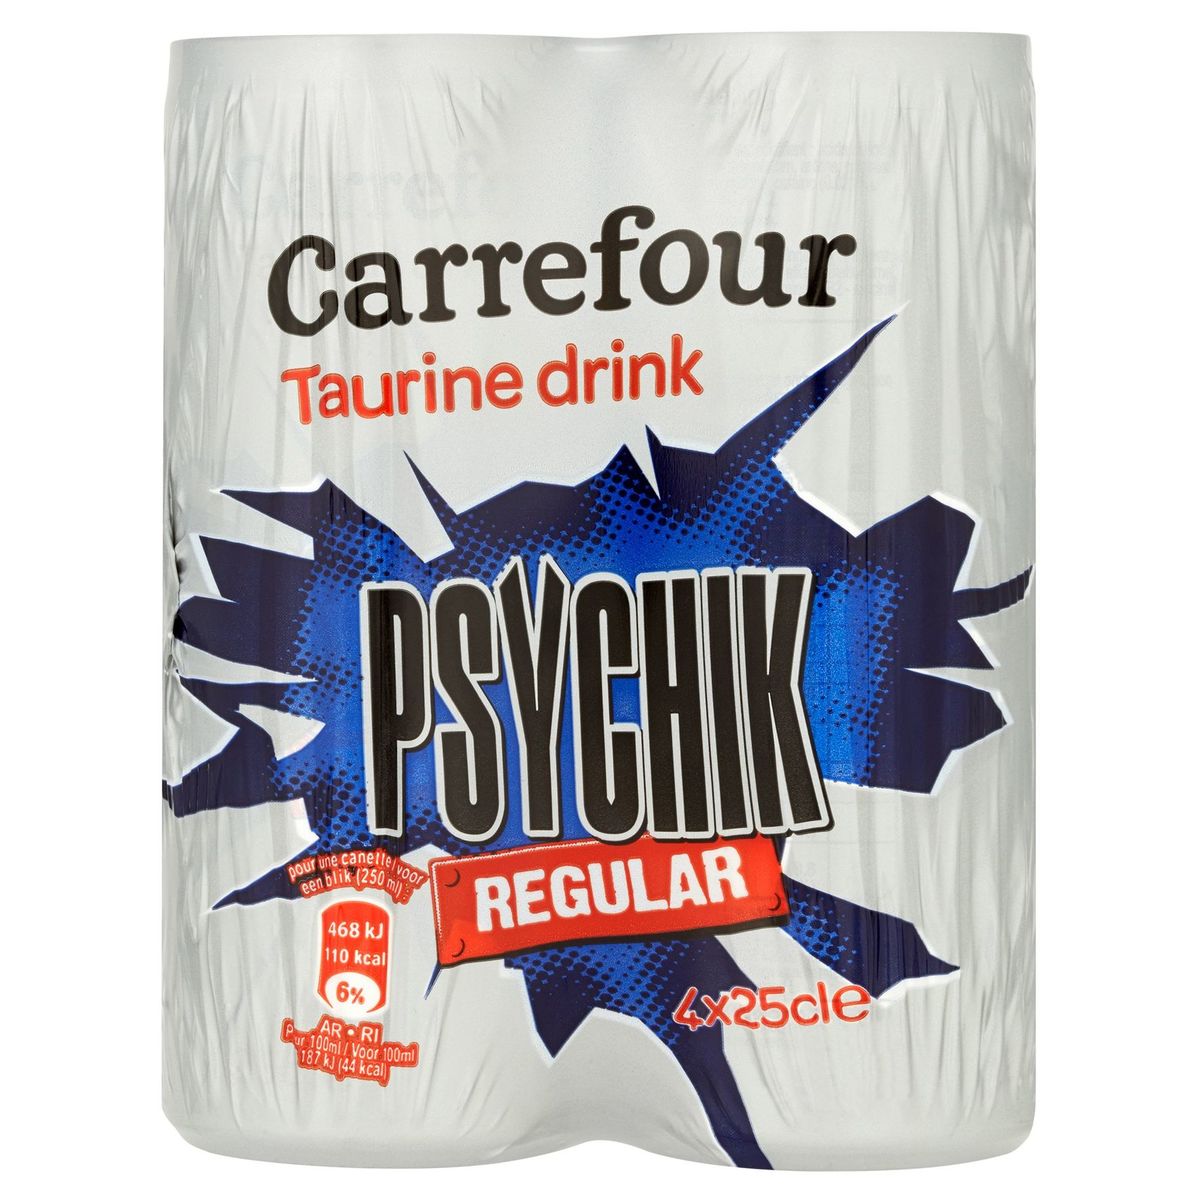 Carrefour Taurine Drink Psychik Regular 4 x 25 cl